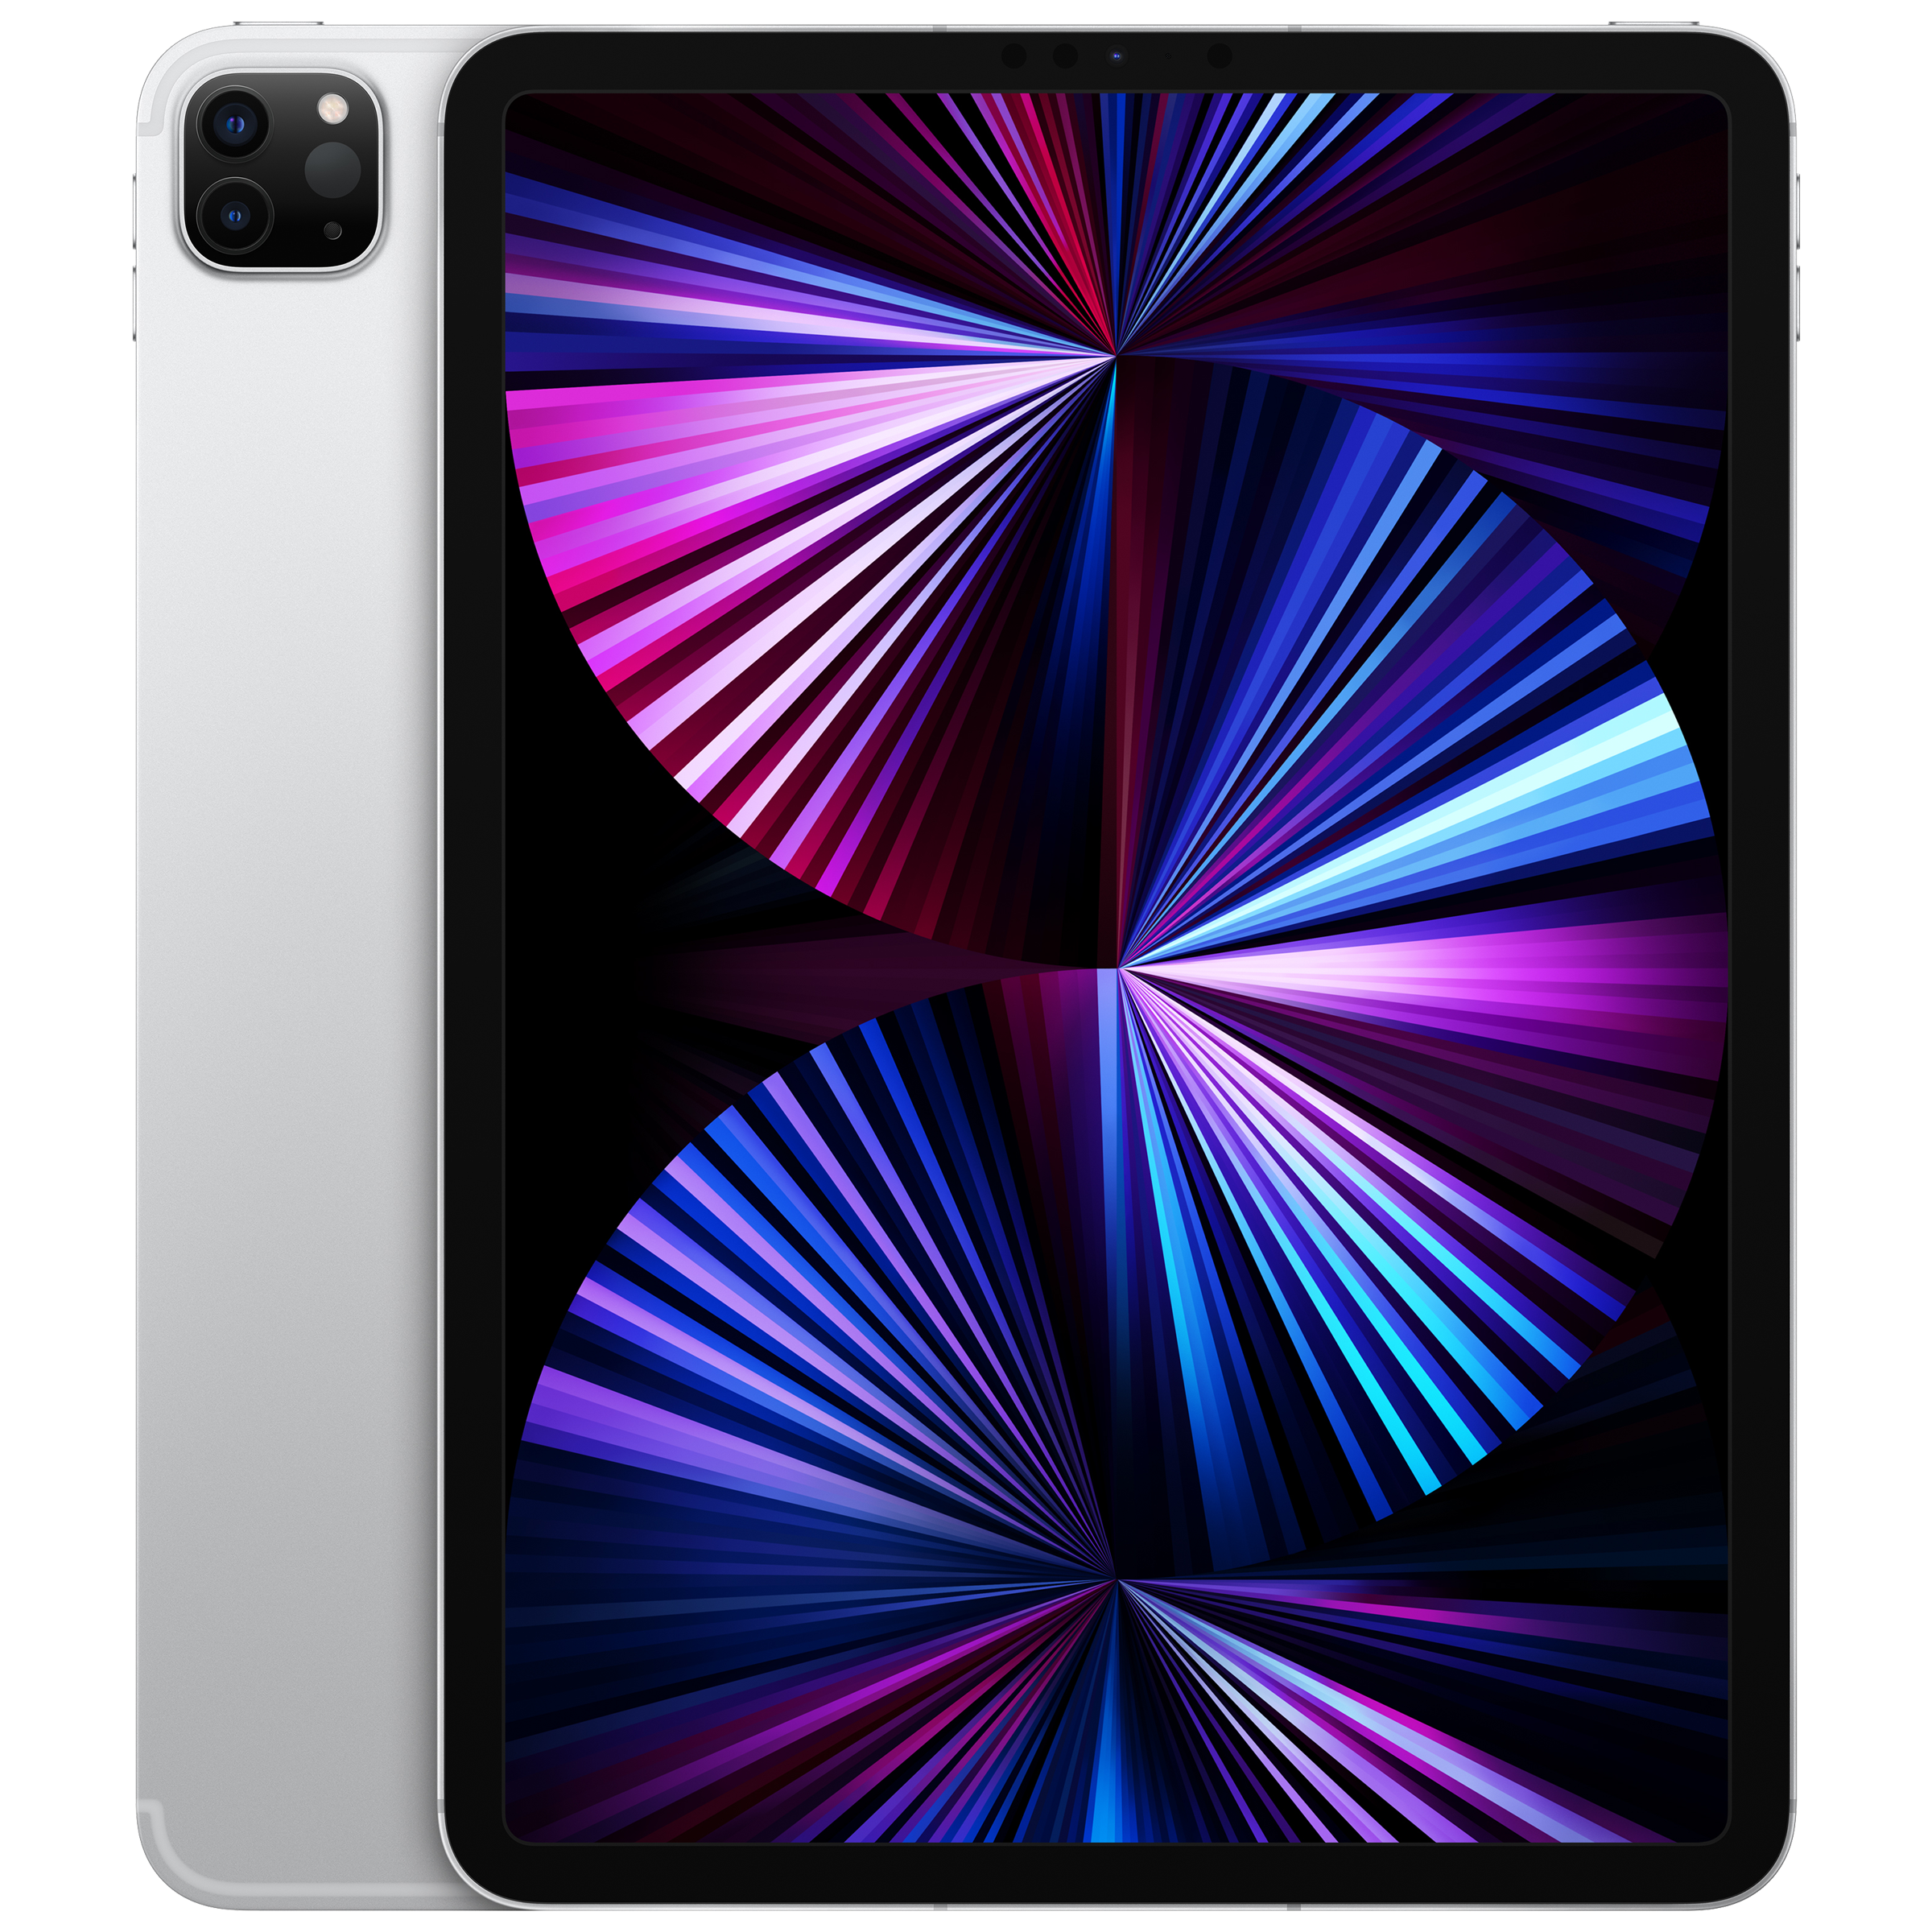 Apple iPad Pro 11 3rd Generation Wi-Fi + 5G (11 Inch, 128GB ROM, Silver,  2021 model)